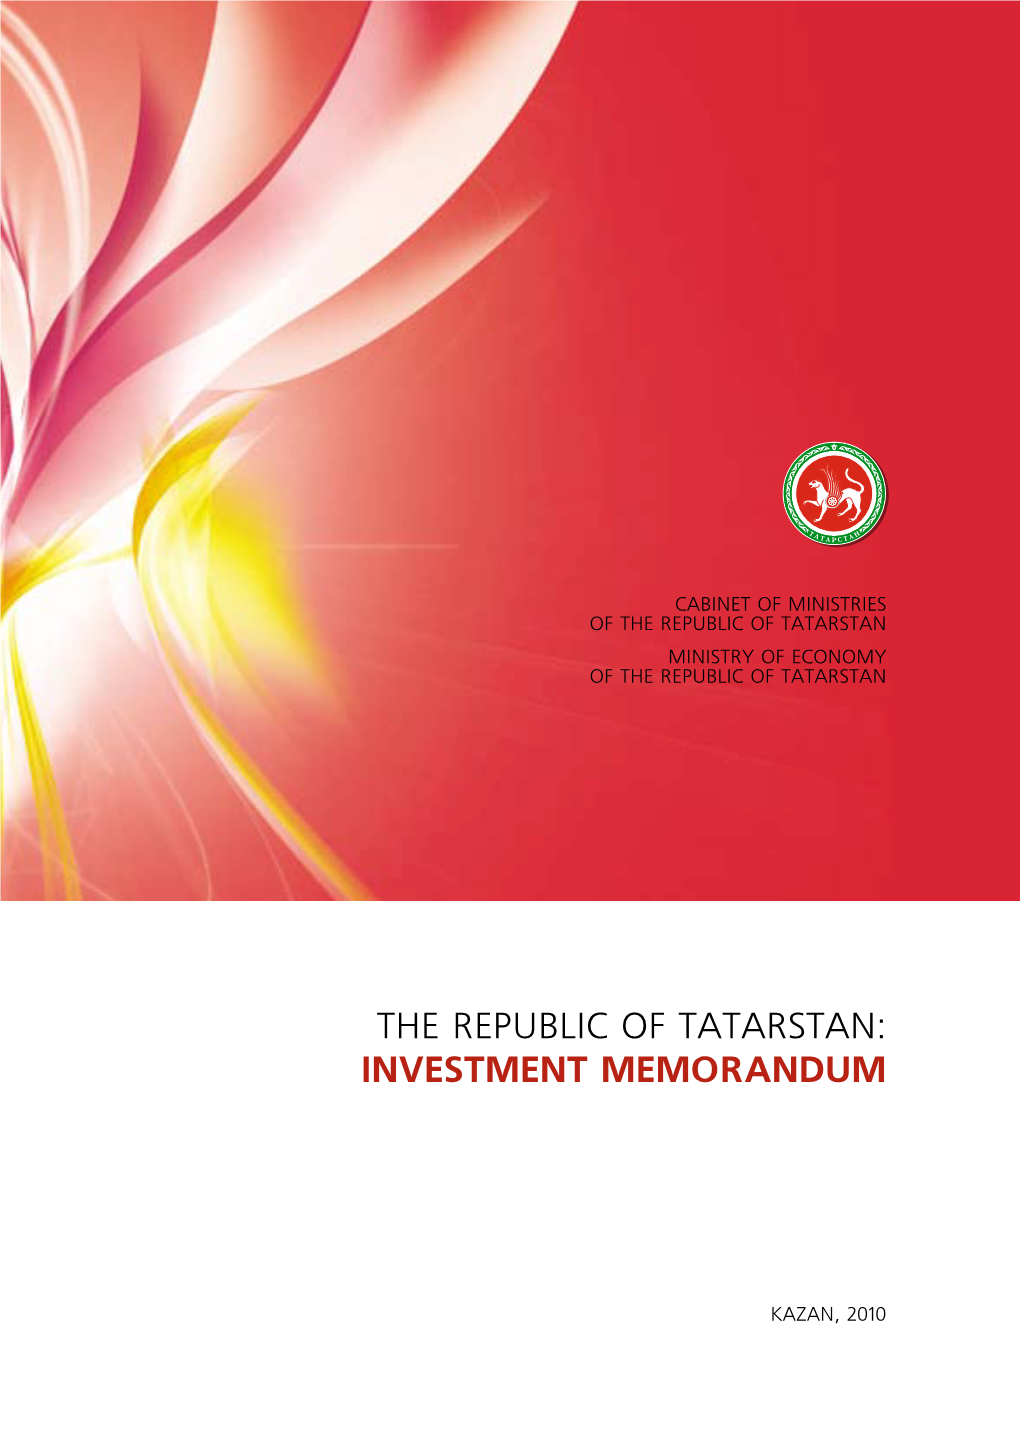 The Republic of Tatarstan: Investment Memorandum